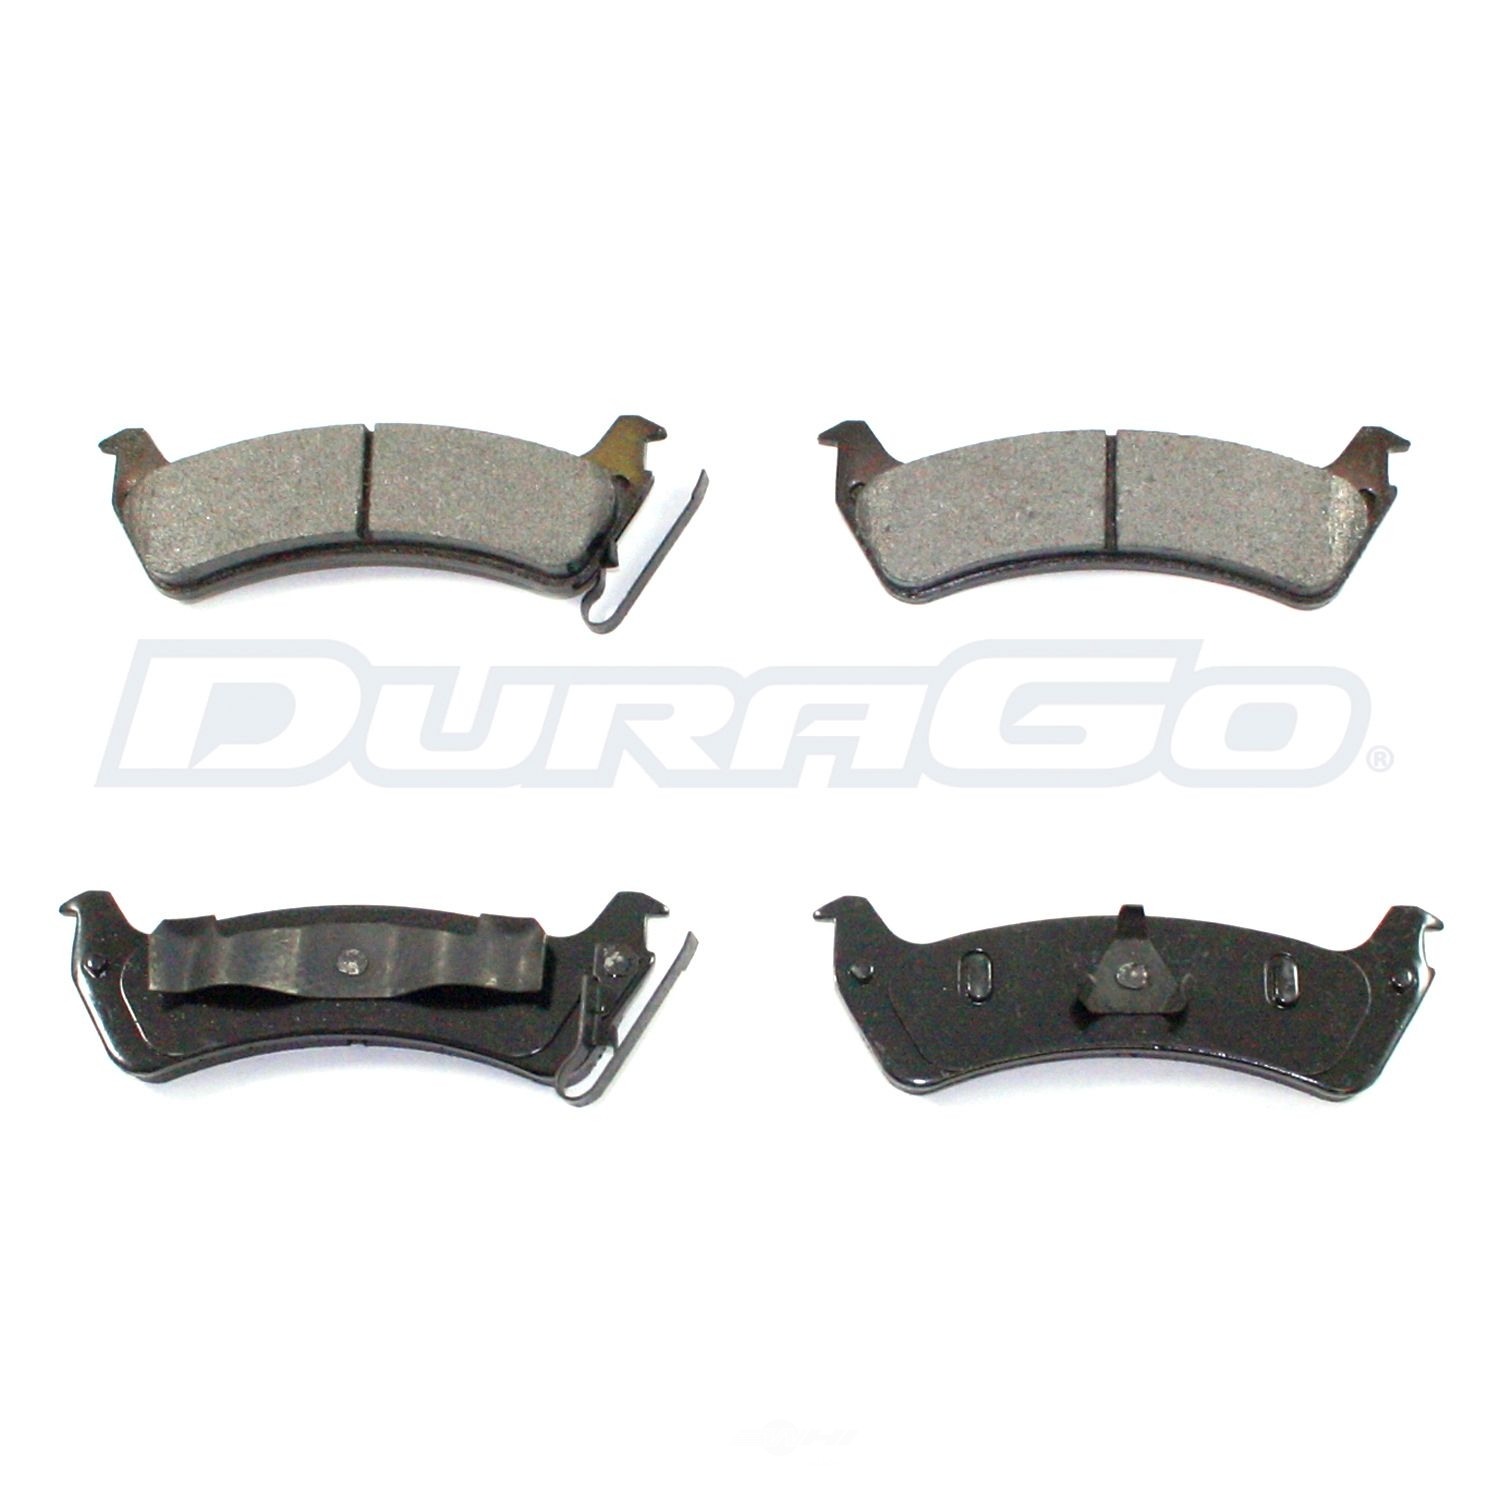 DURAGO - Disc Brake Pad (Rear) - D48 BP666MS